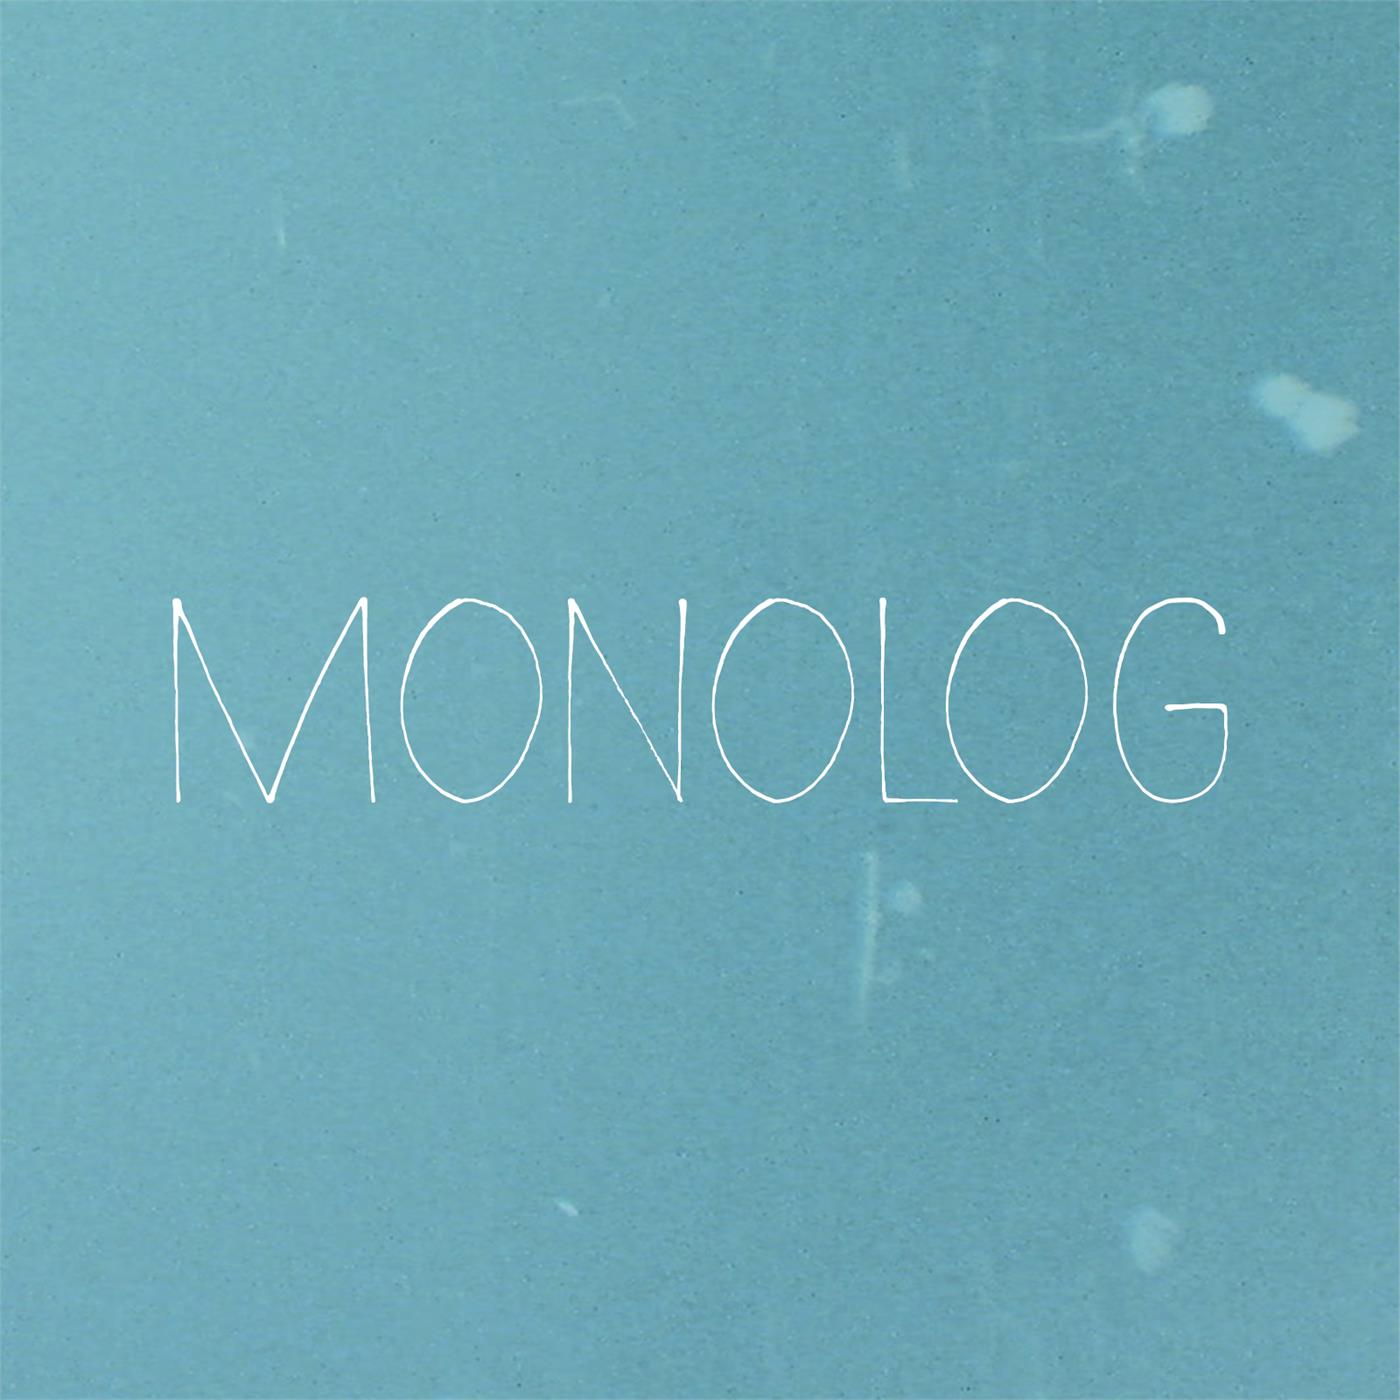 Monolog